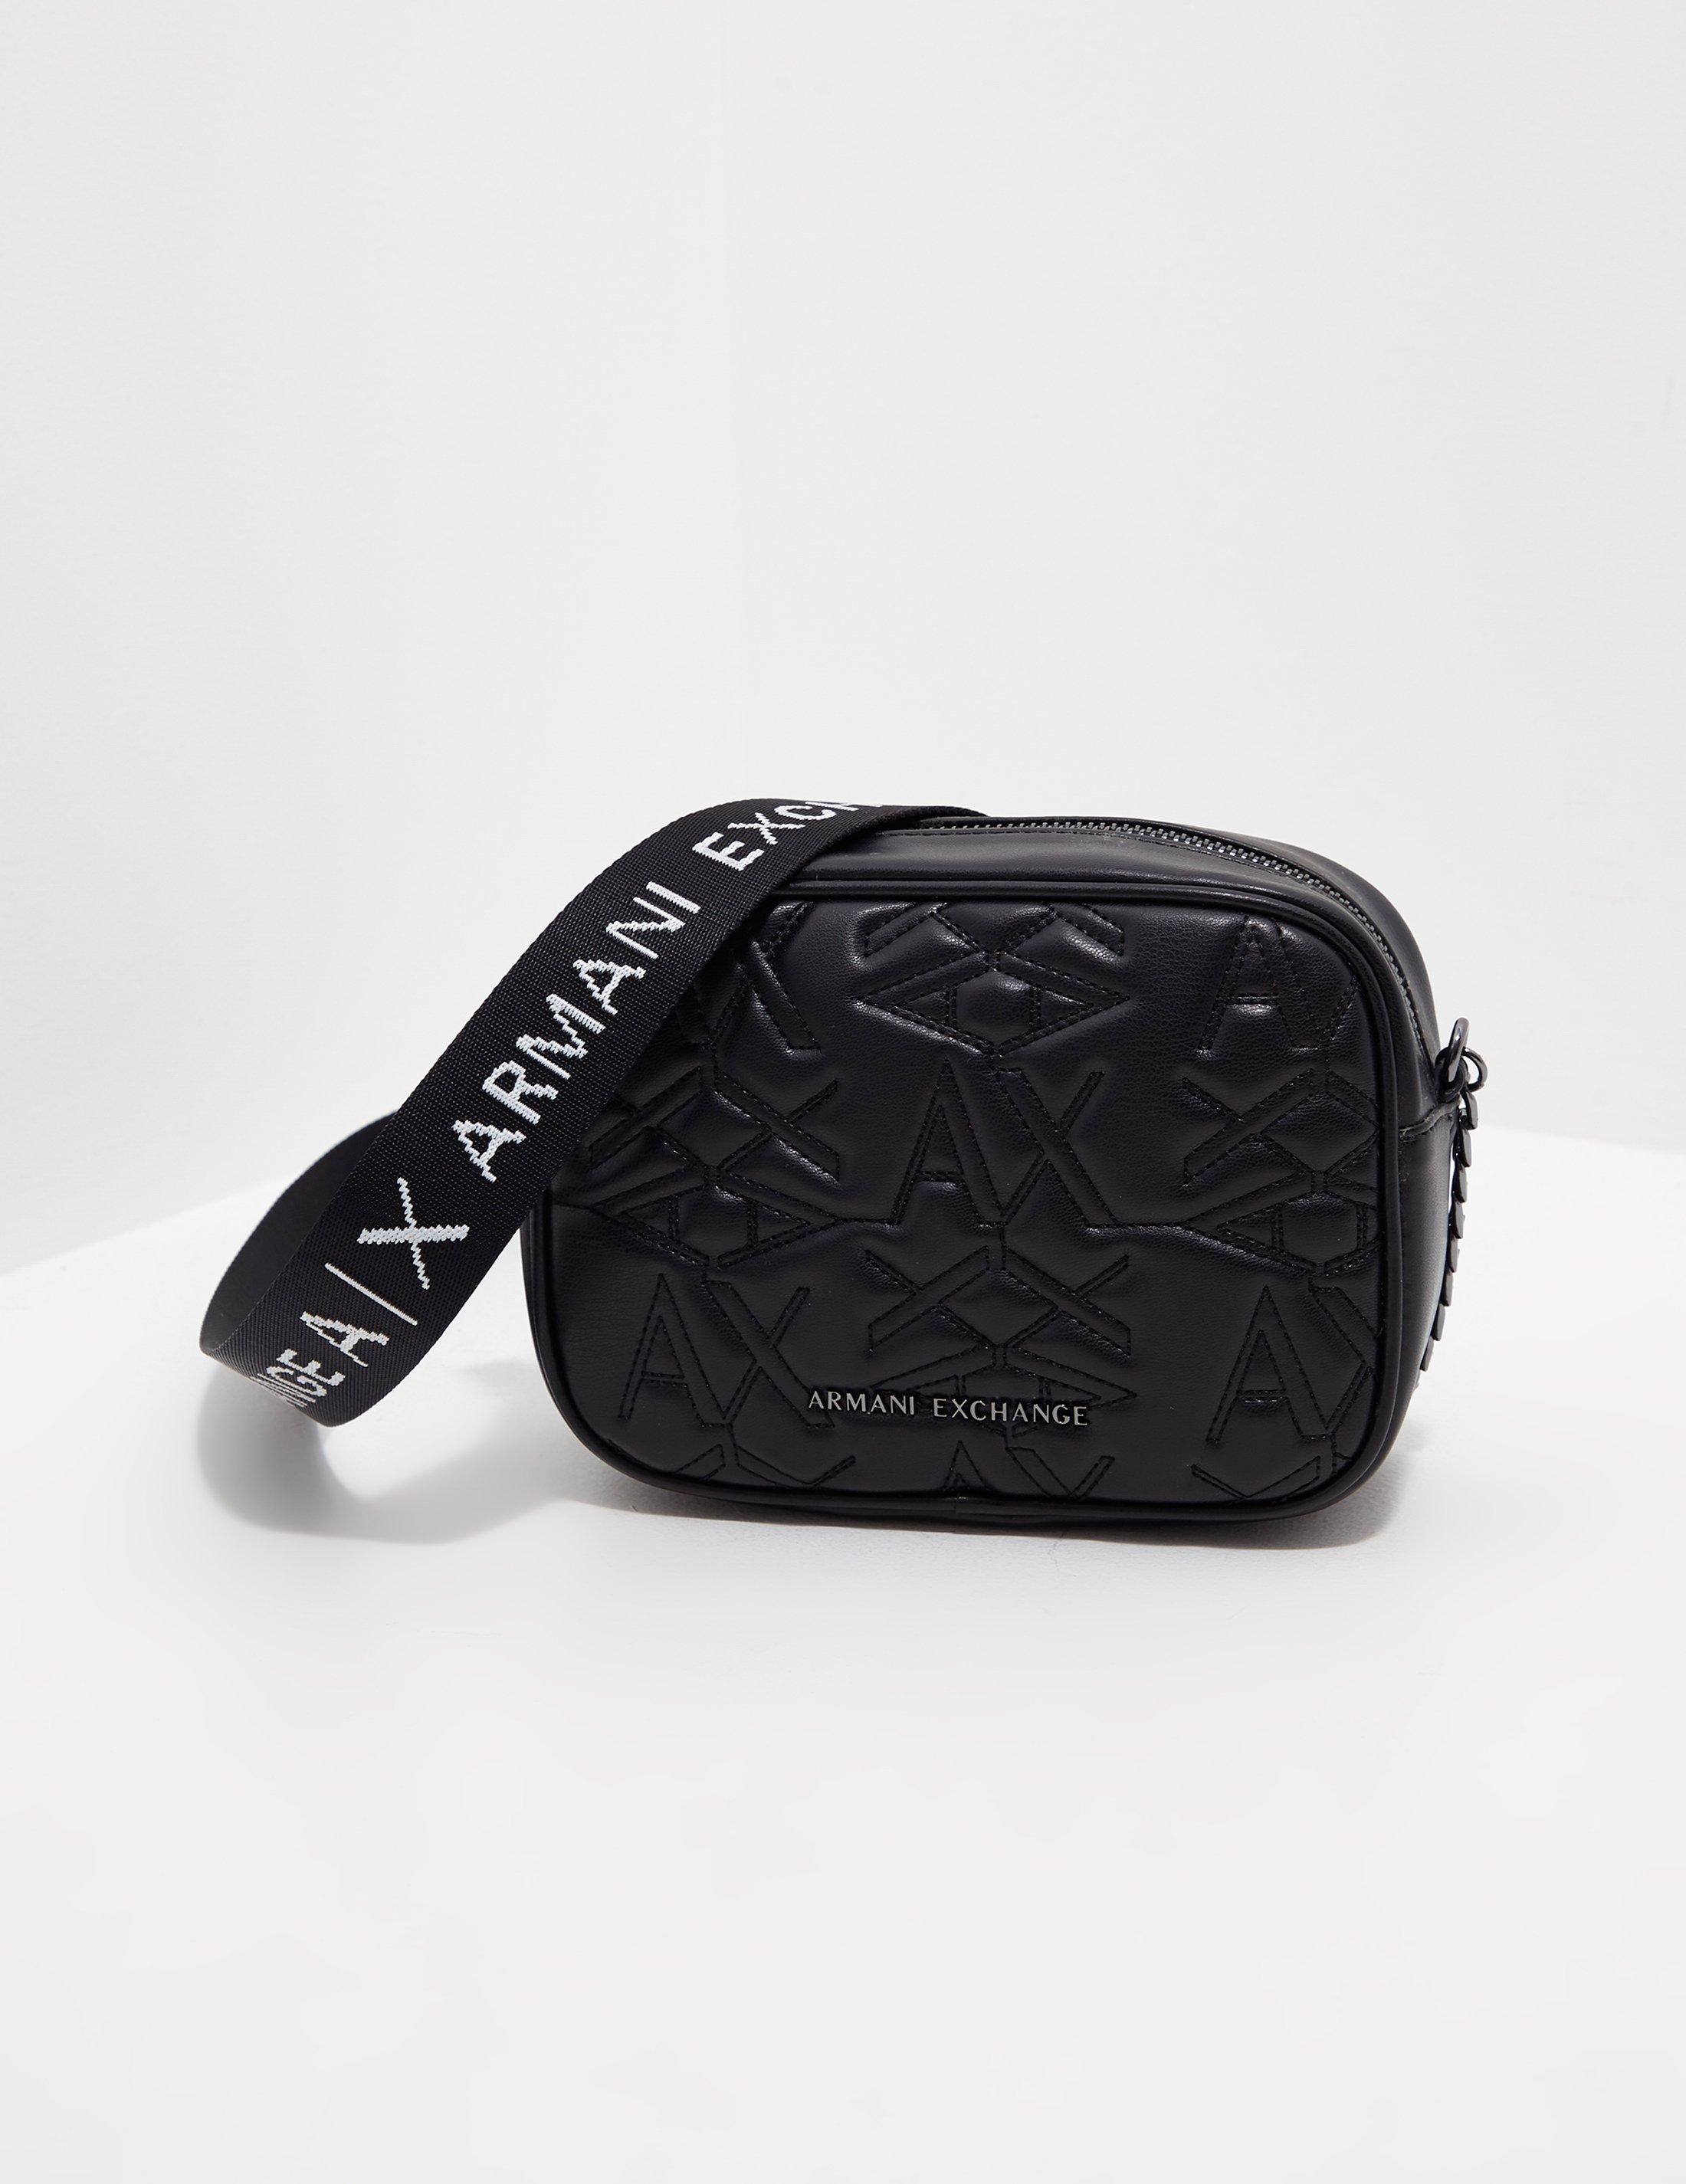 Armani Exchange Pouch Bag On Sale, Save 59% | jlcatj.gob.mx